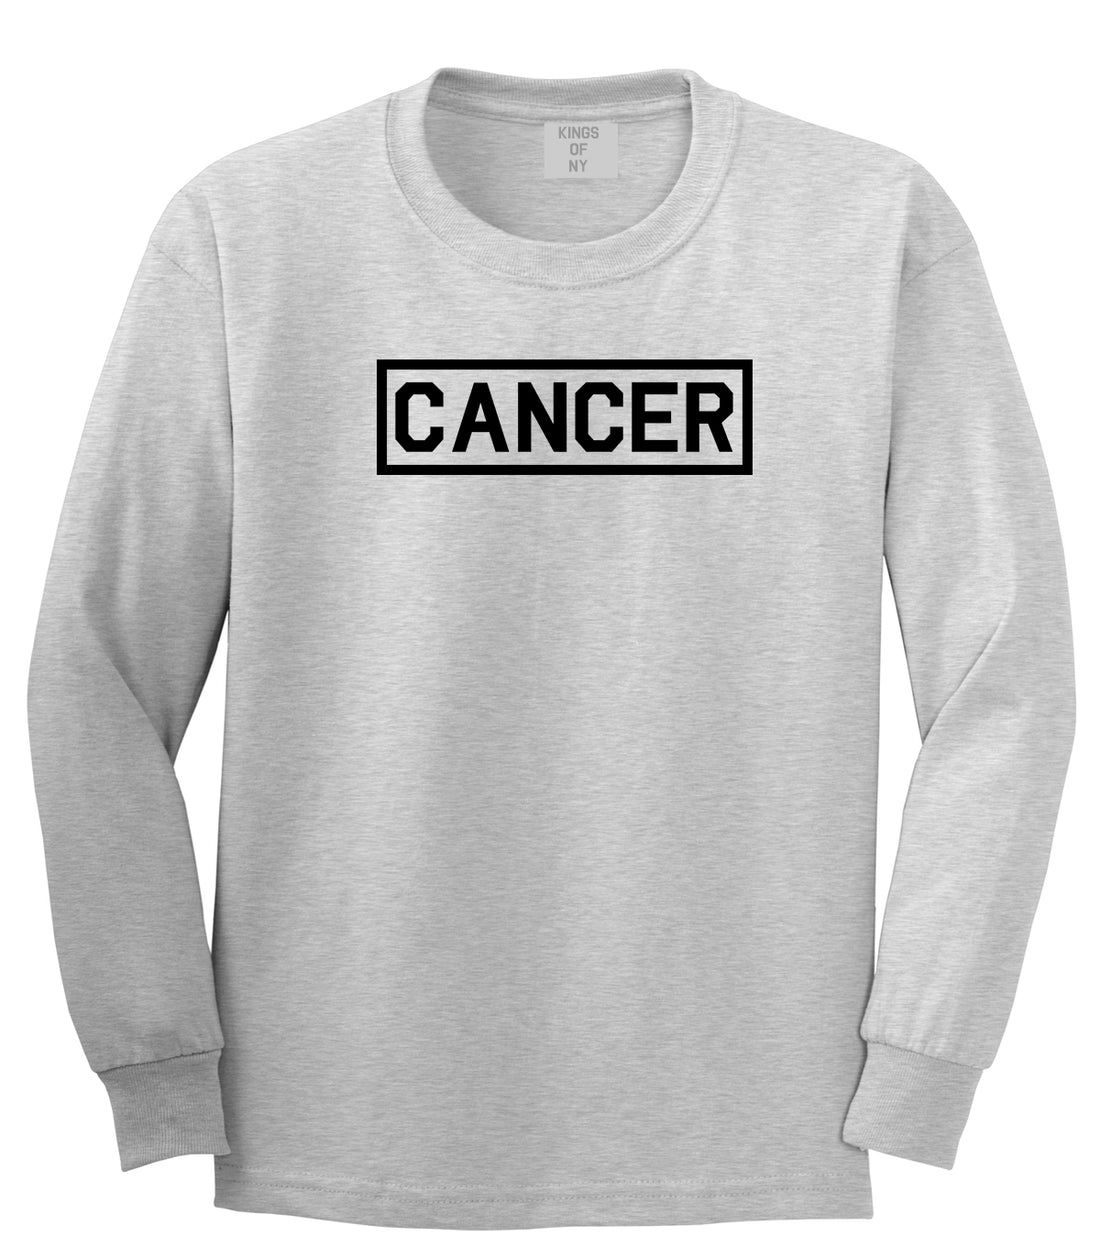 Cancer Horoscope Sign Mens Grey Long Sleeve T-Shirt by KINGS OF NY